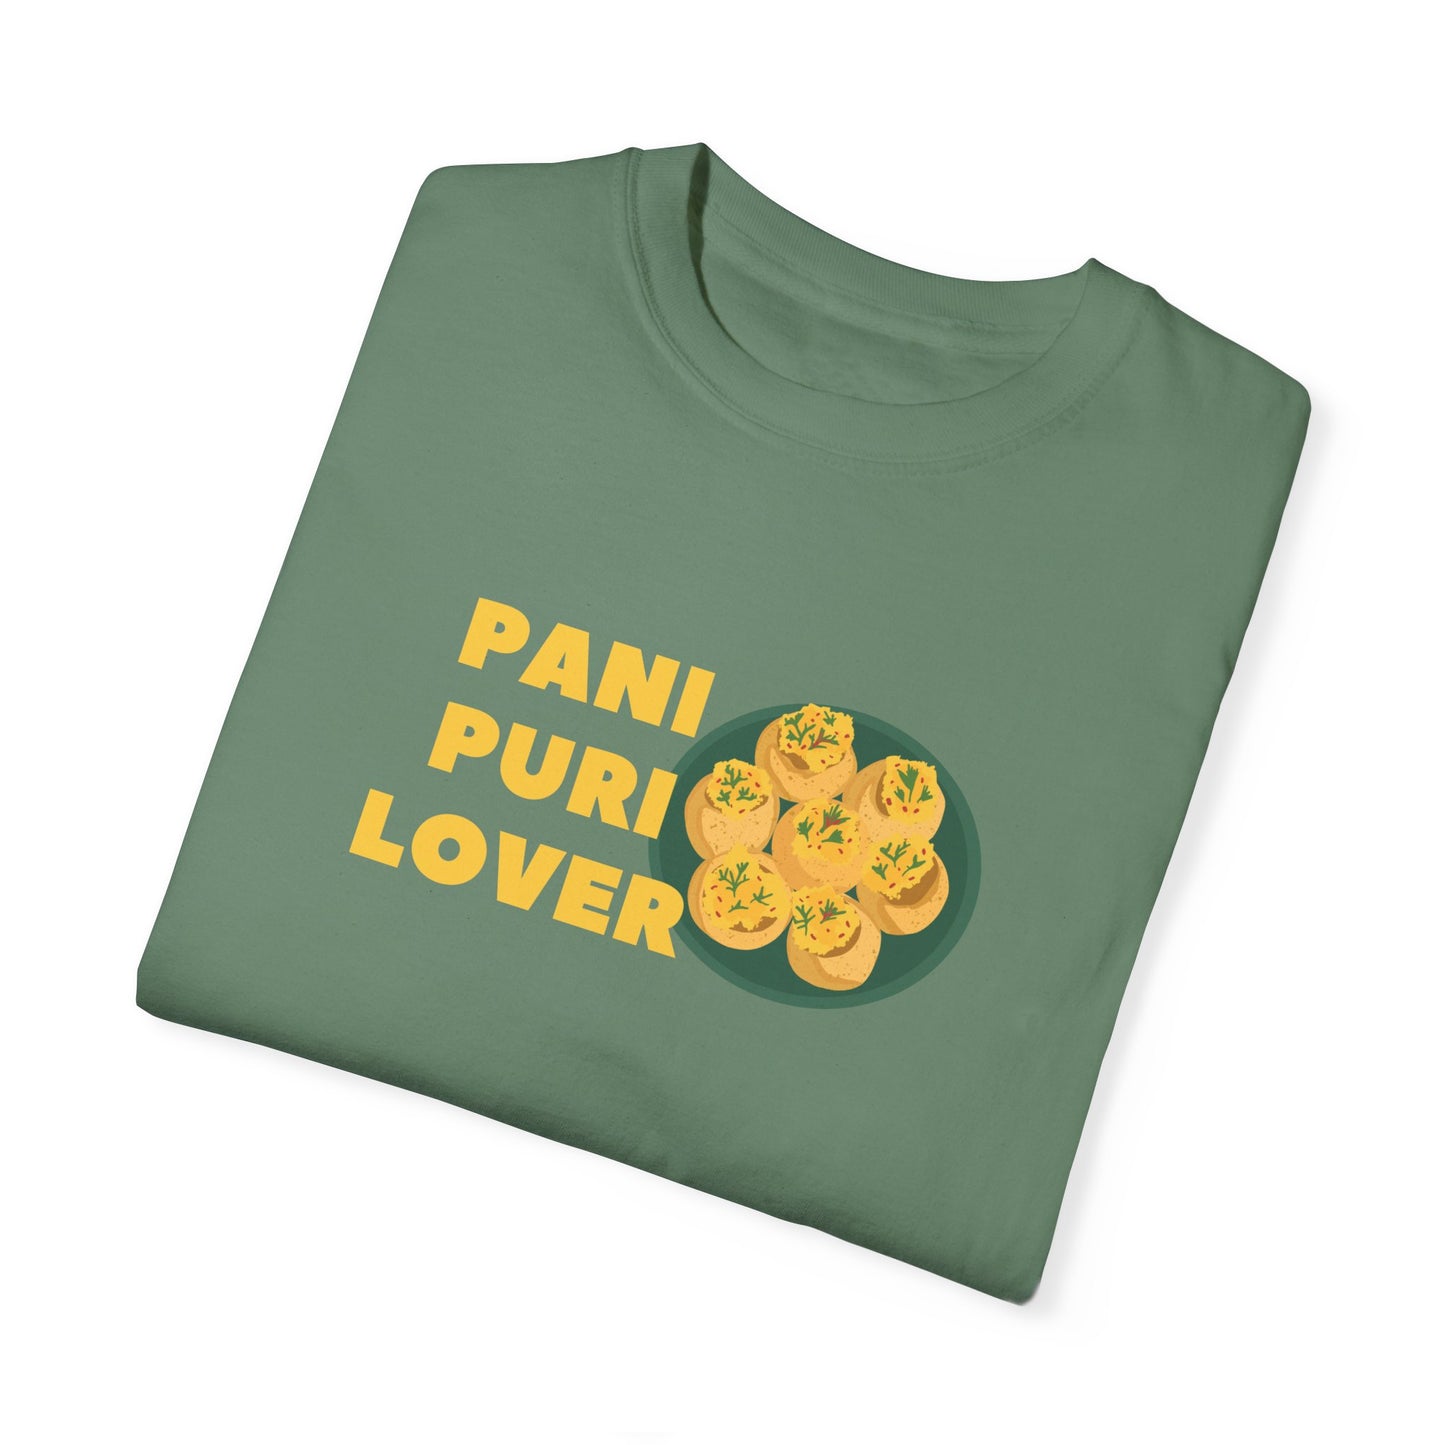 Pani Puri Lover T-Shirt